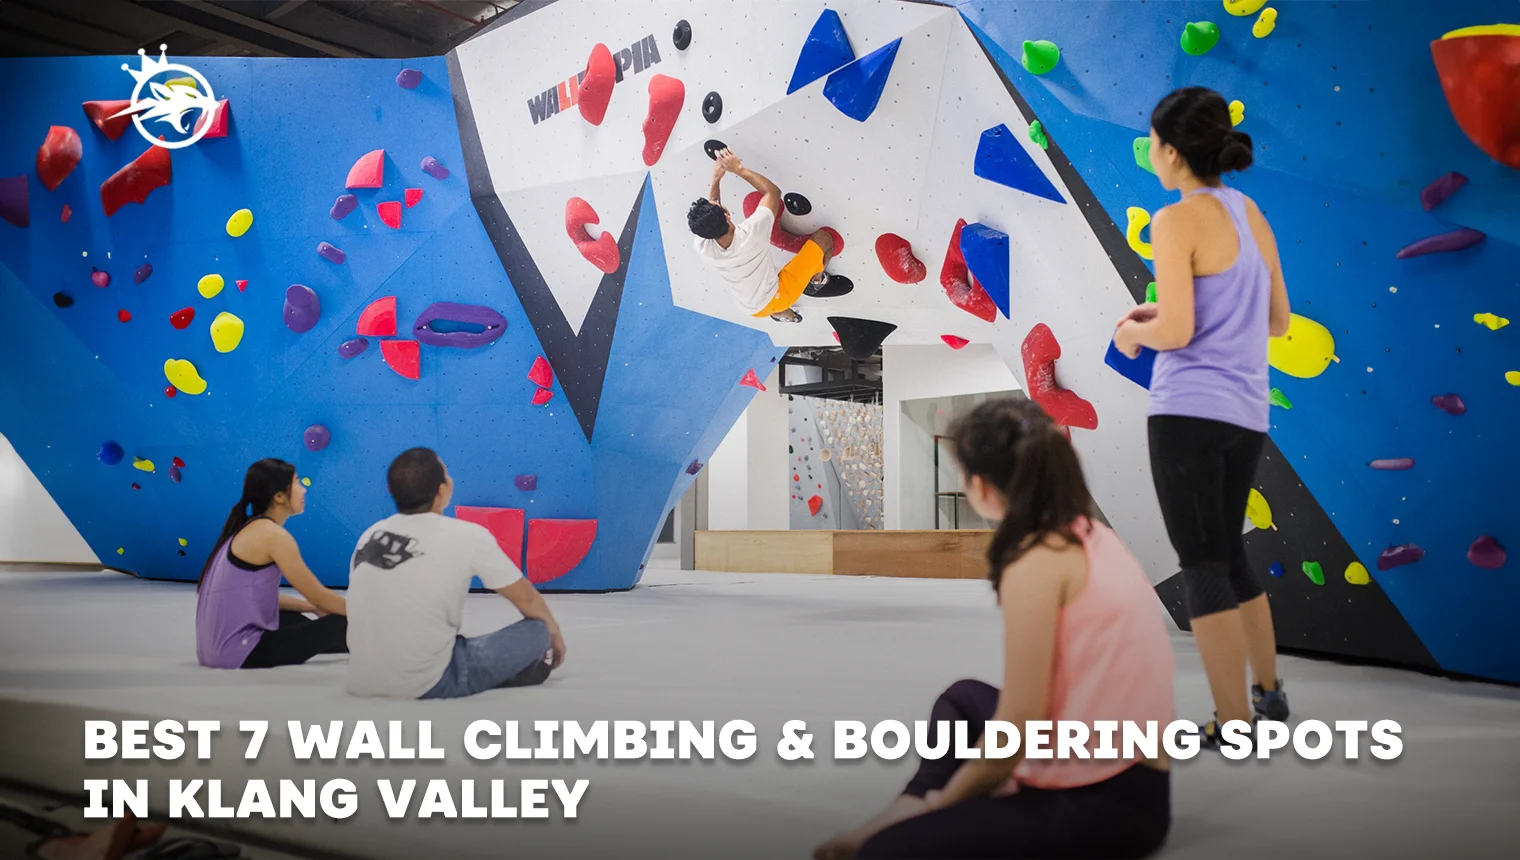 Best 7 Wall Climbing & Bouldering Spots in Klang Valley